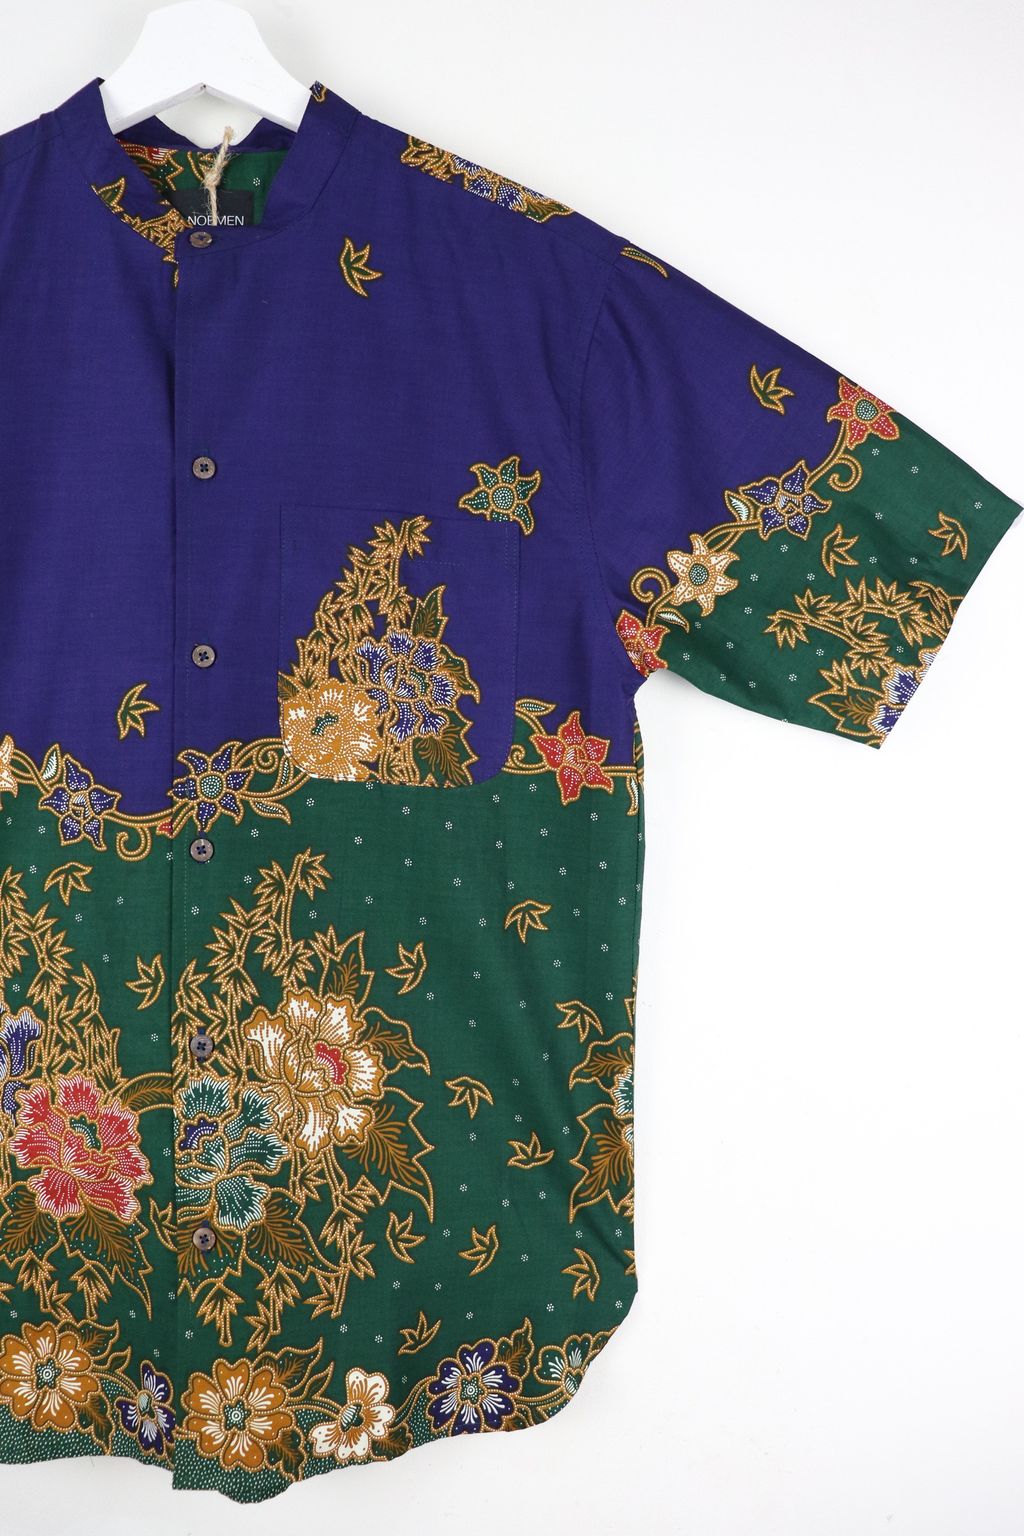 kanoemen-stand-collared-batik-shirt-11